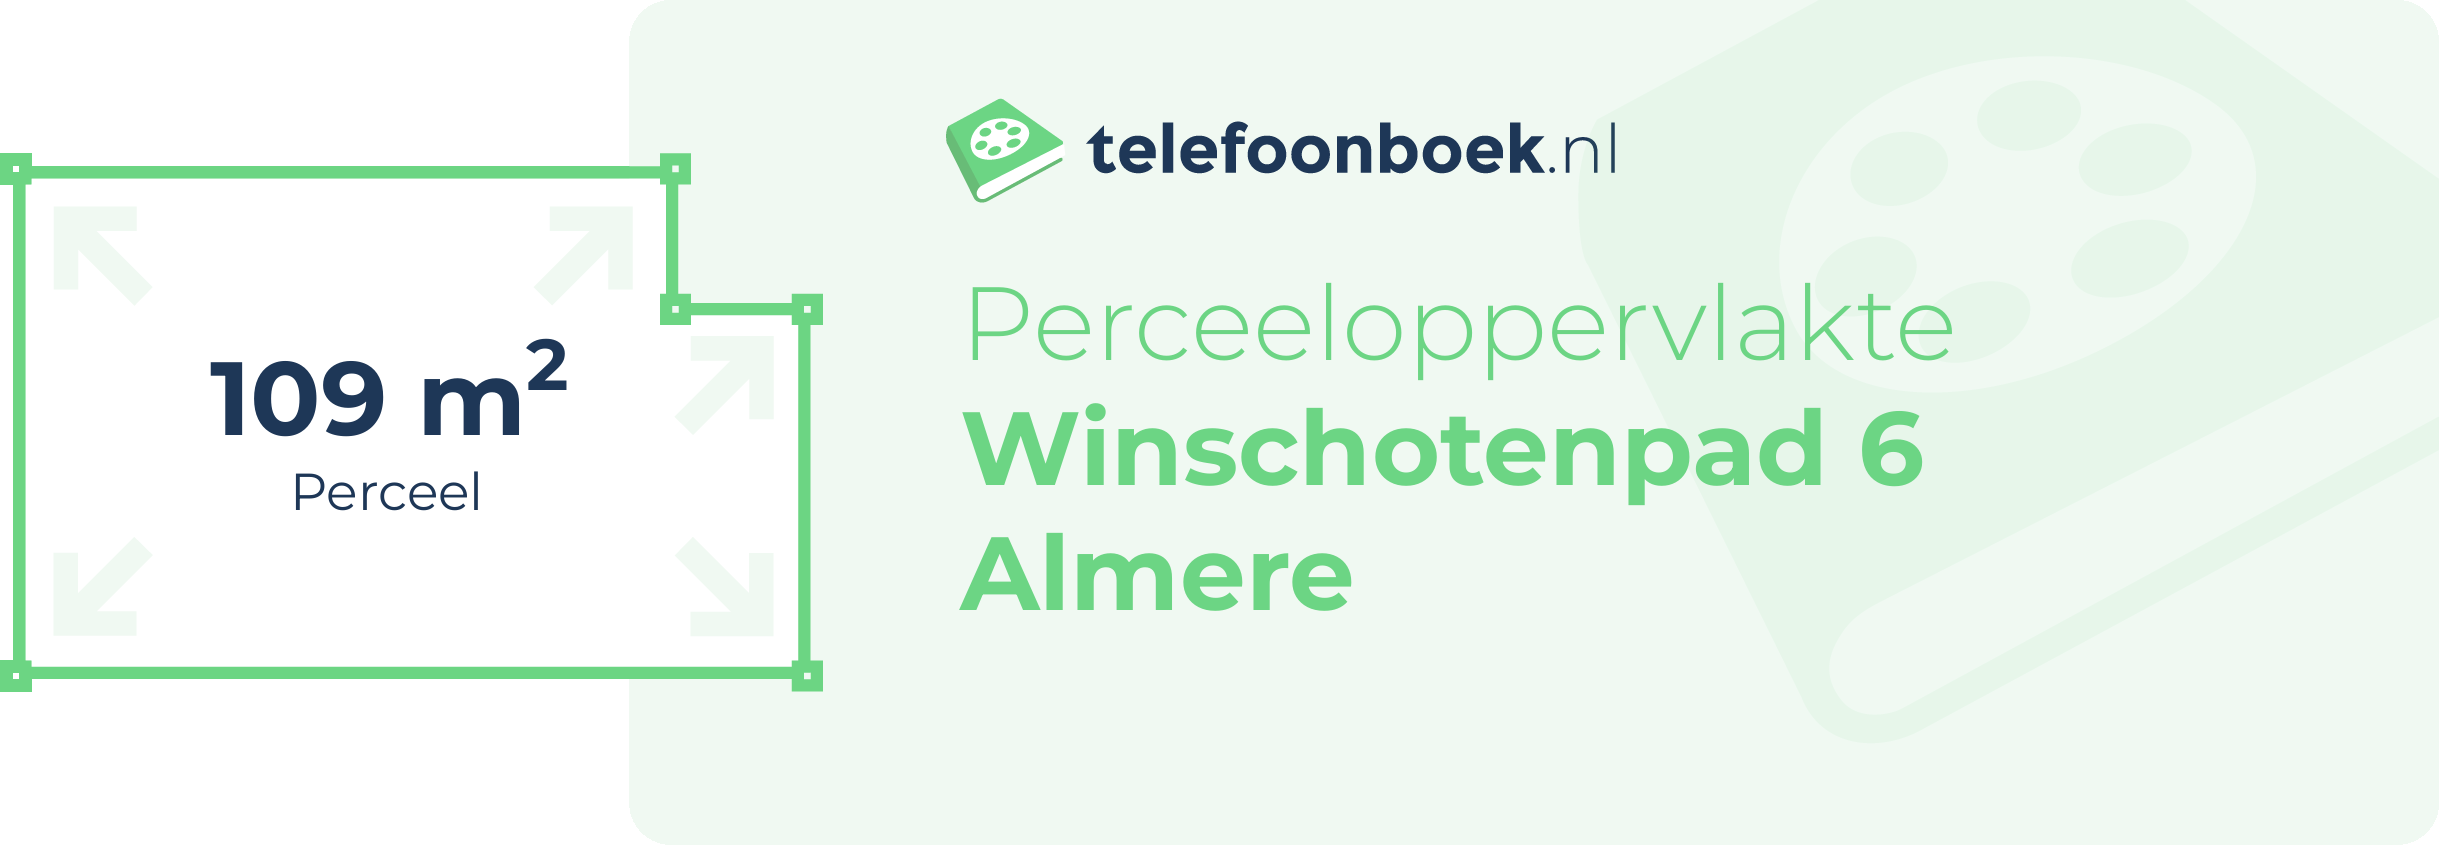 Perceeloppervlakte Winschotenpad 6 Almere